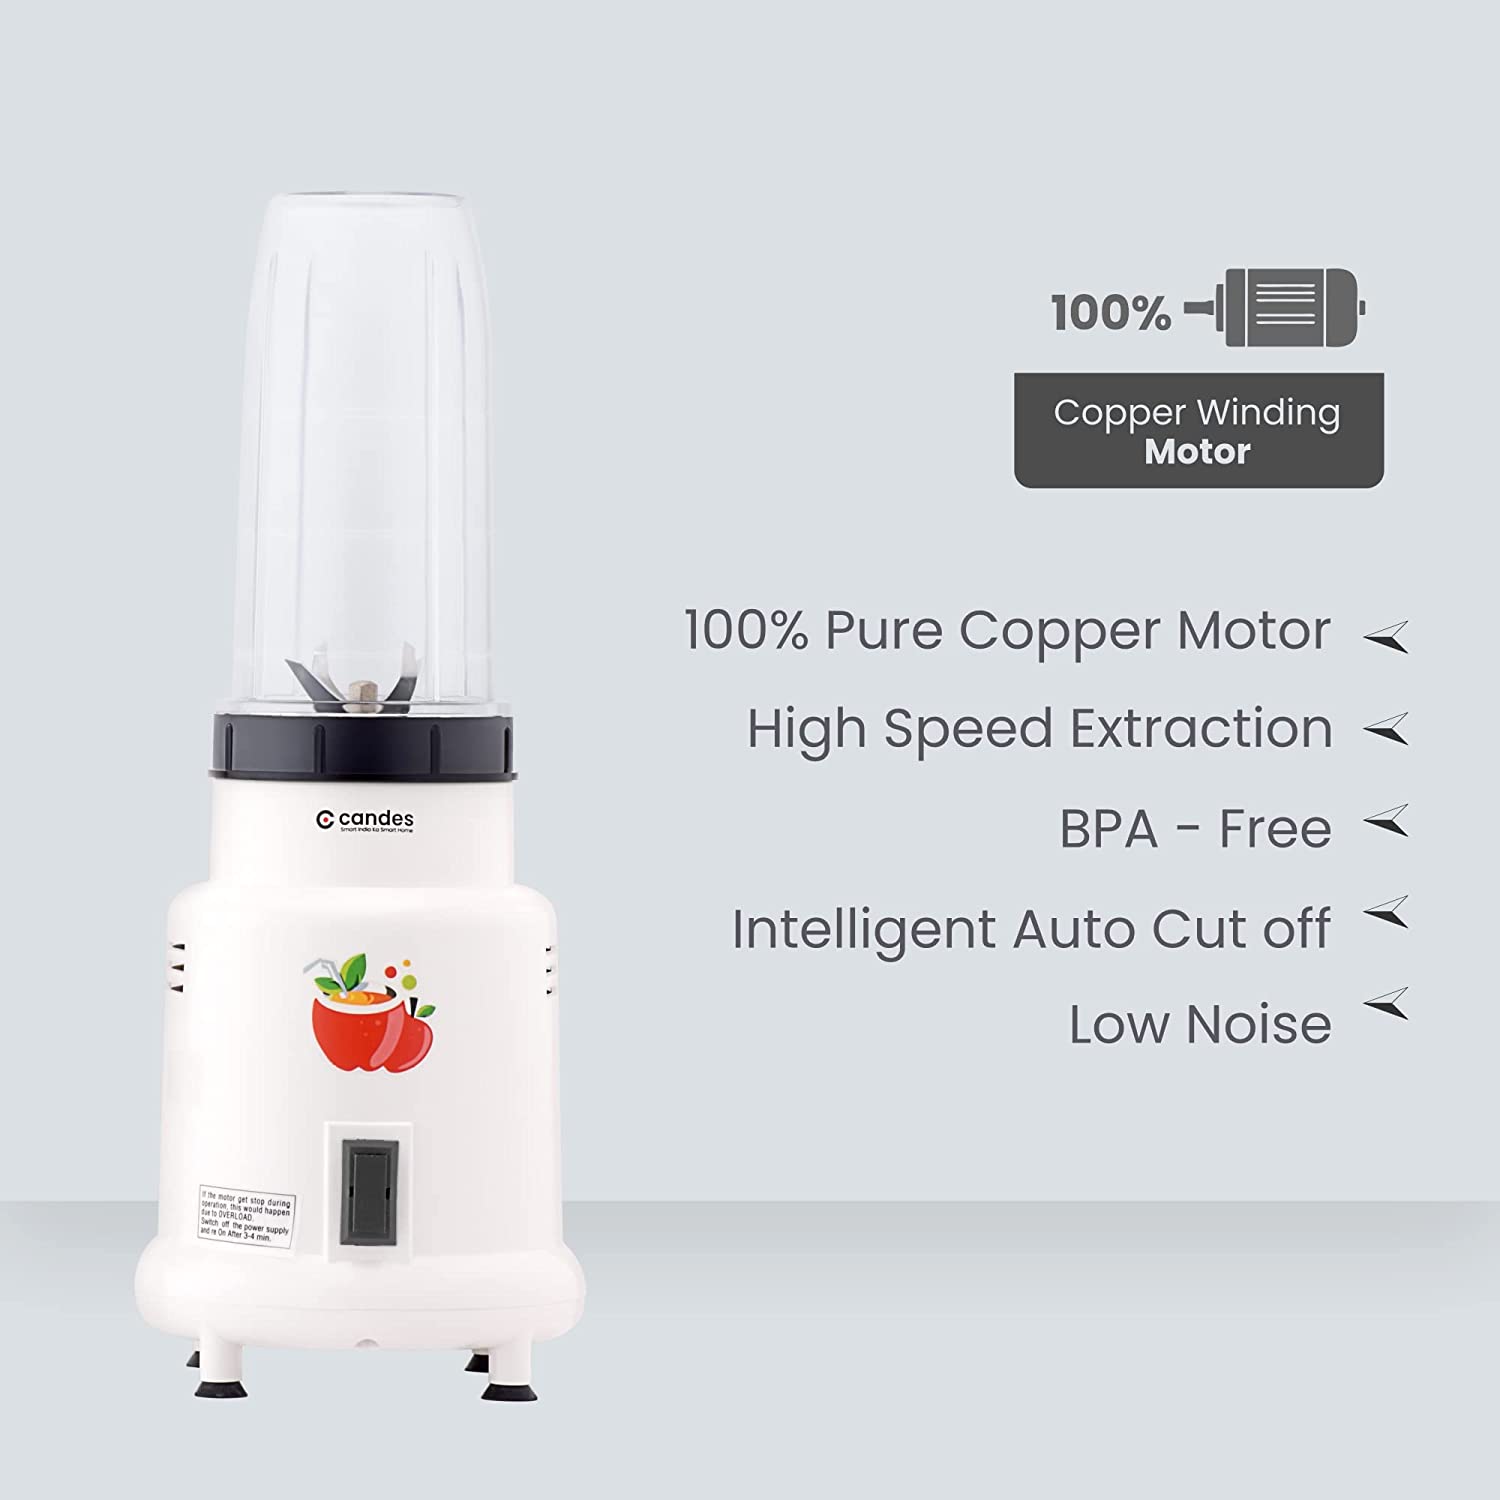 Hector Nutri Blender Complete Kitchen Machine with 2 Unbreakable Jars, 400W (White)